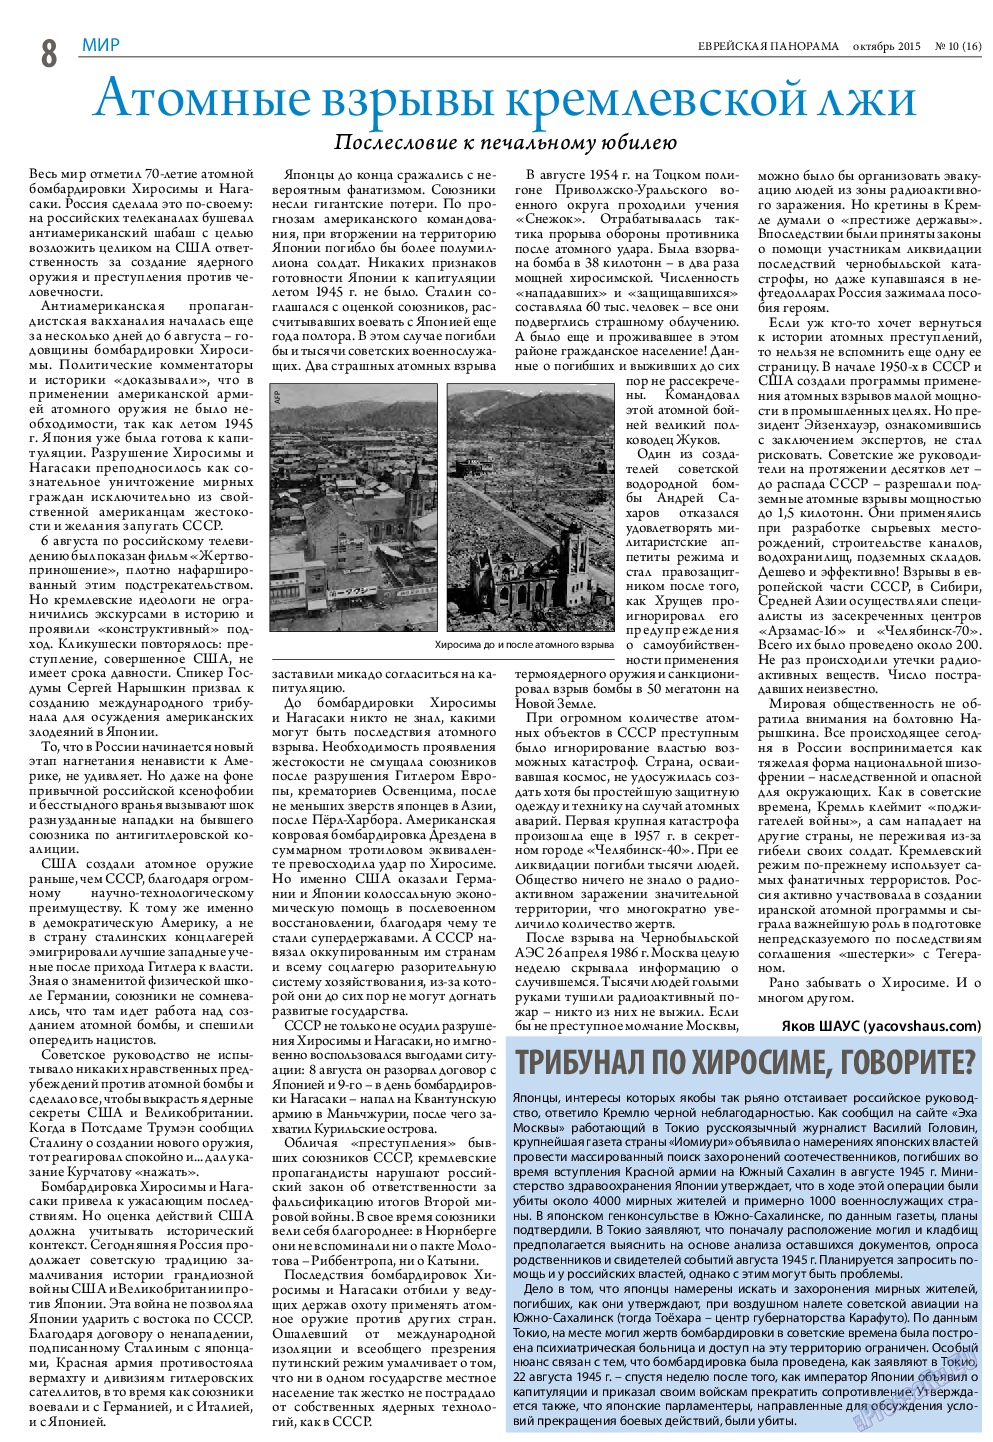 Еврейская панорама, газета. 2015 №10 стр.8